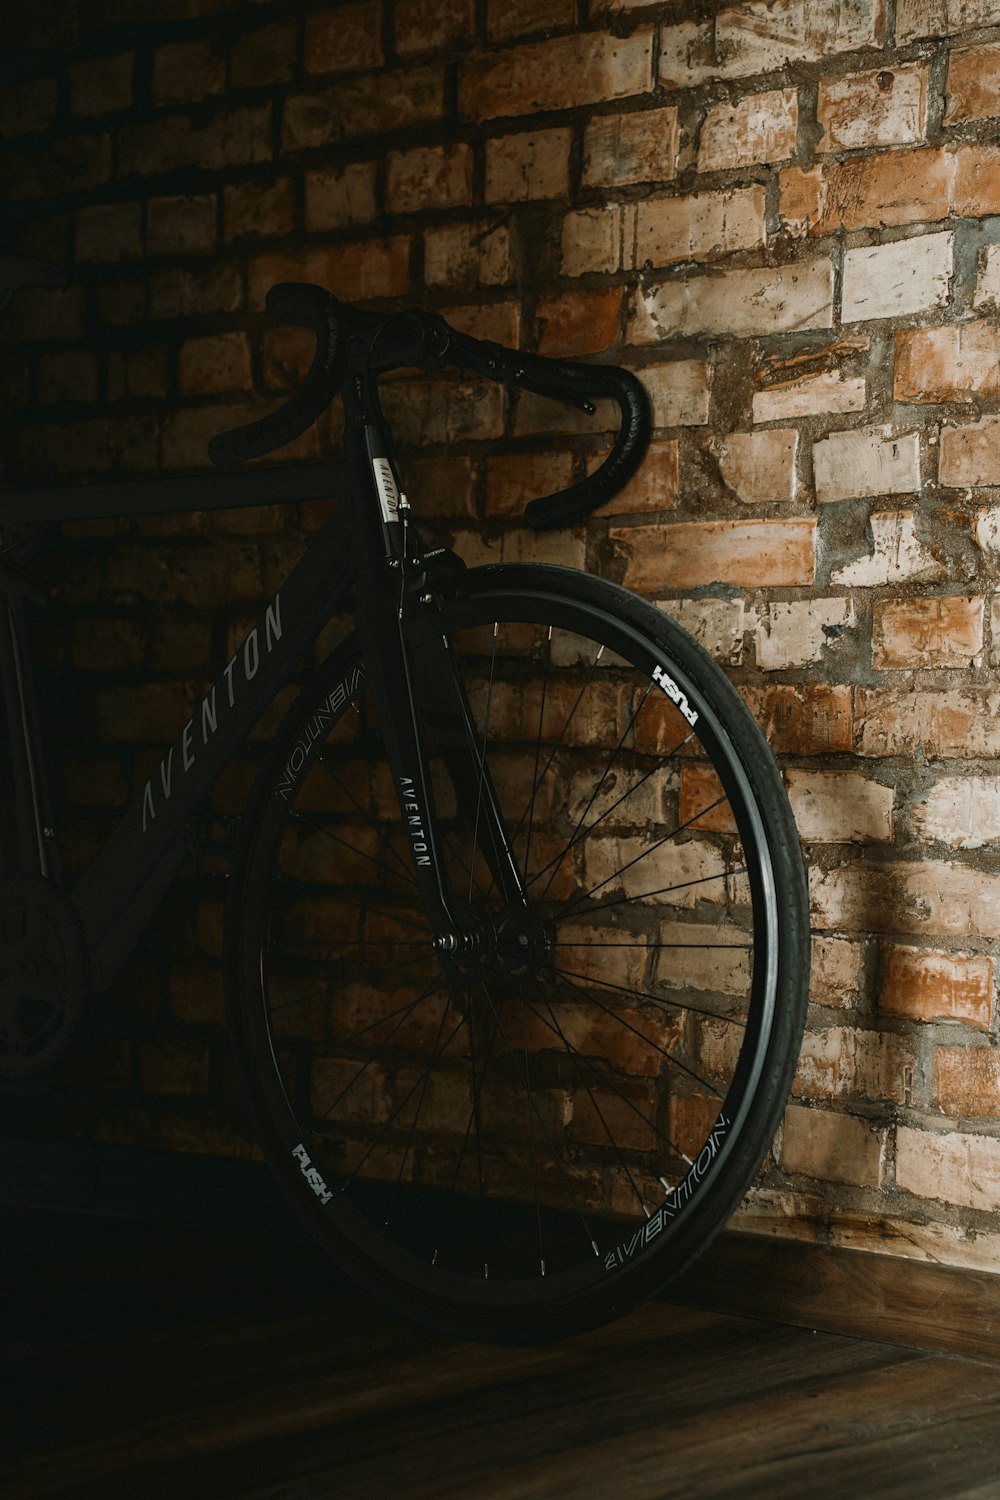 a black bike leaning against a brick wall